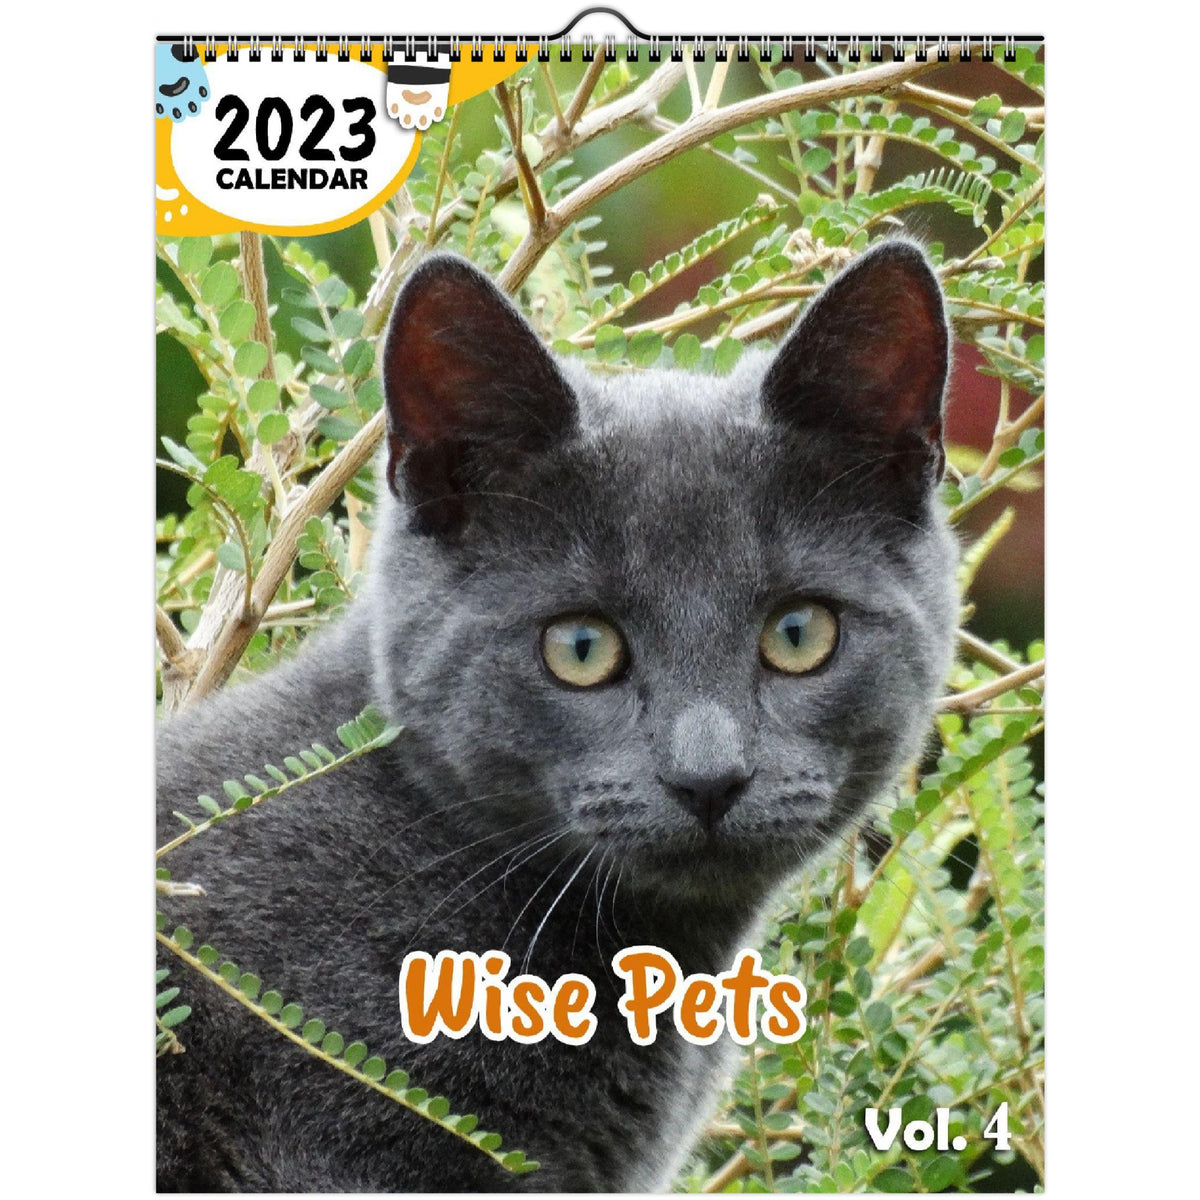 Wise Pets Volume Four 2023 Wall Calendar The Blissful Birder